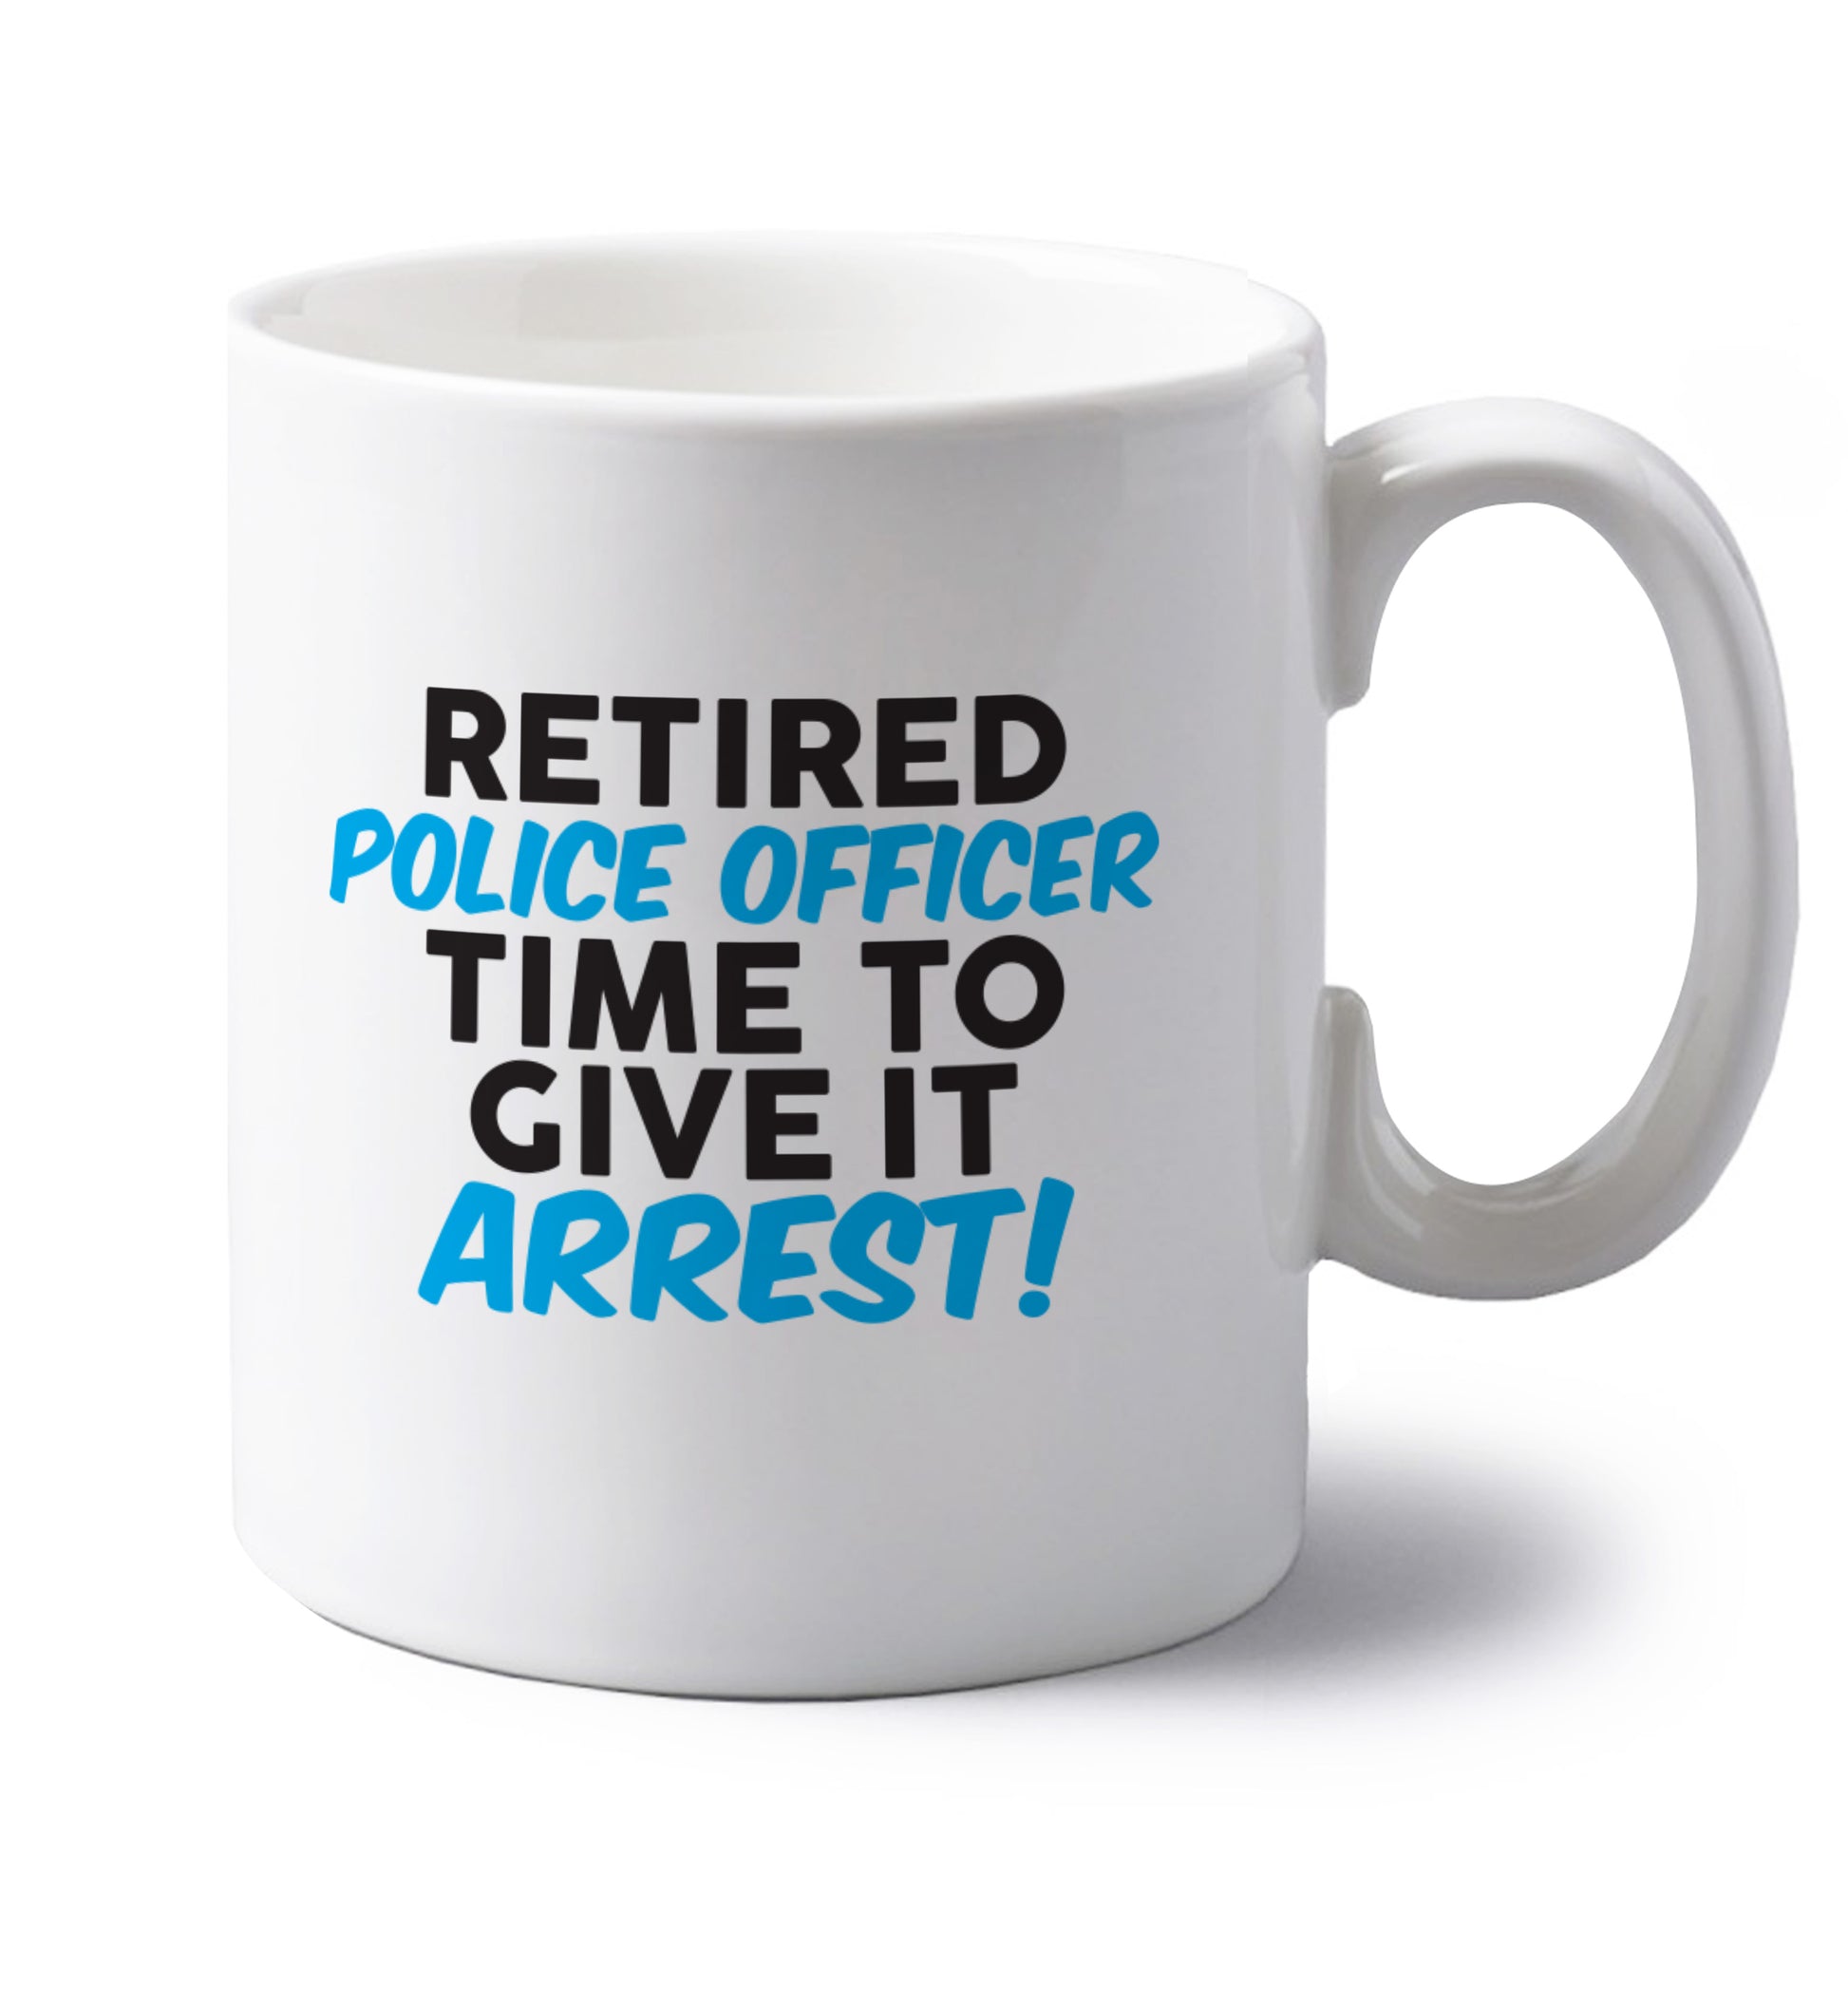 Retired police officer time to give it arrest left handed white ceramic mug 